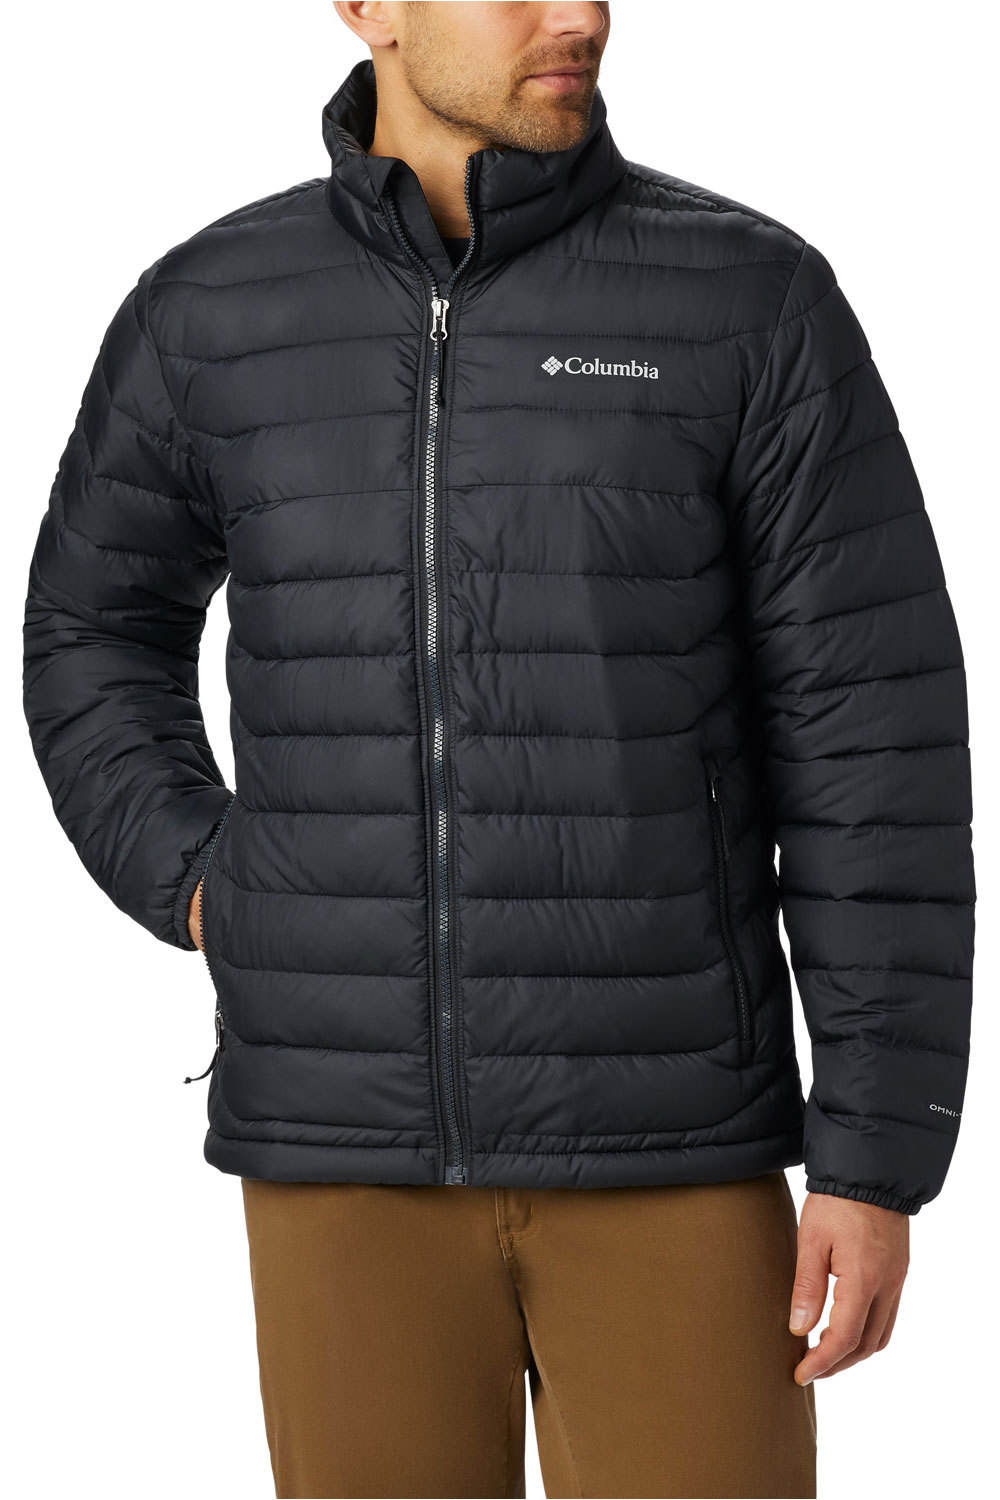 Columbia chaqueta outdoor hombre POWDER LITE JACKET vista frontal